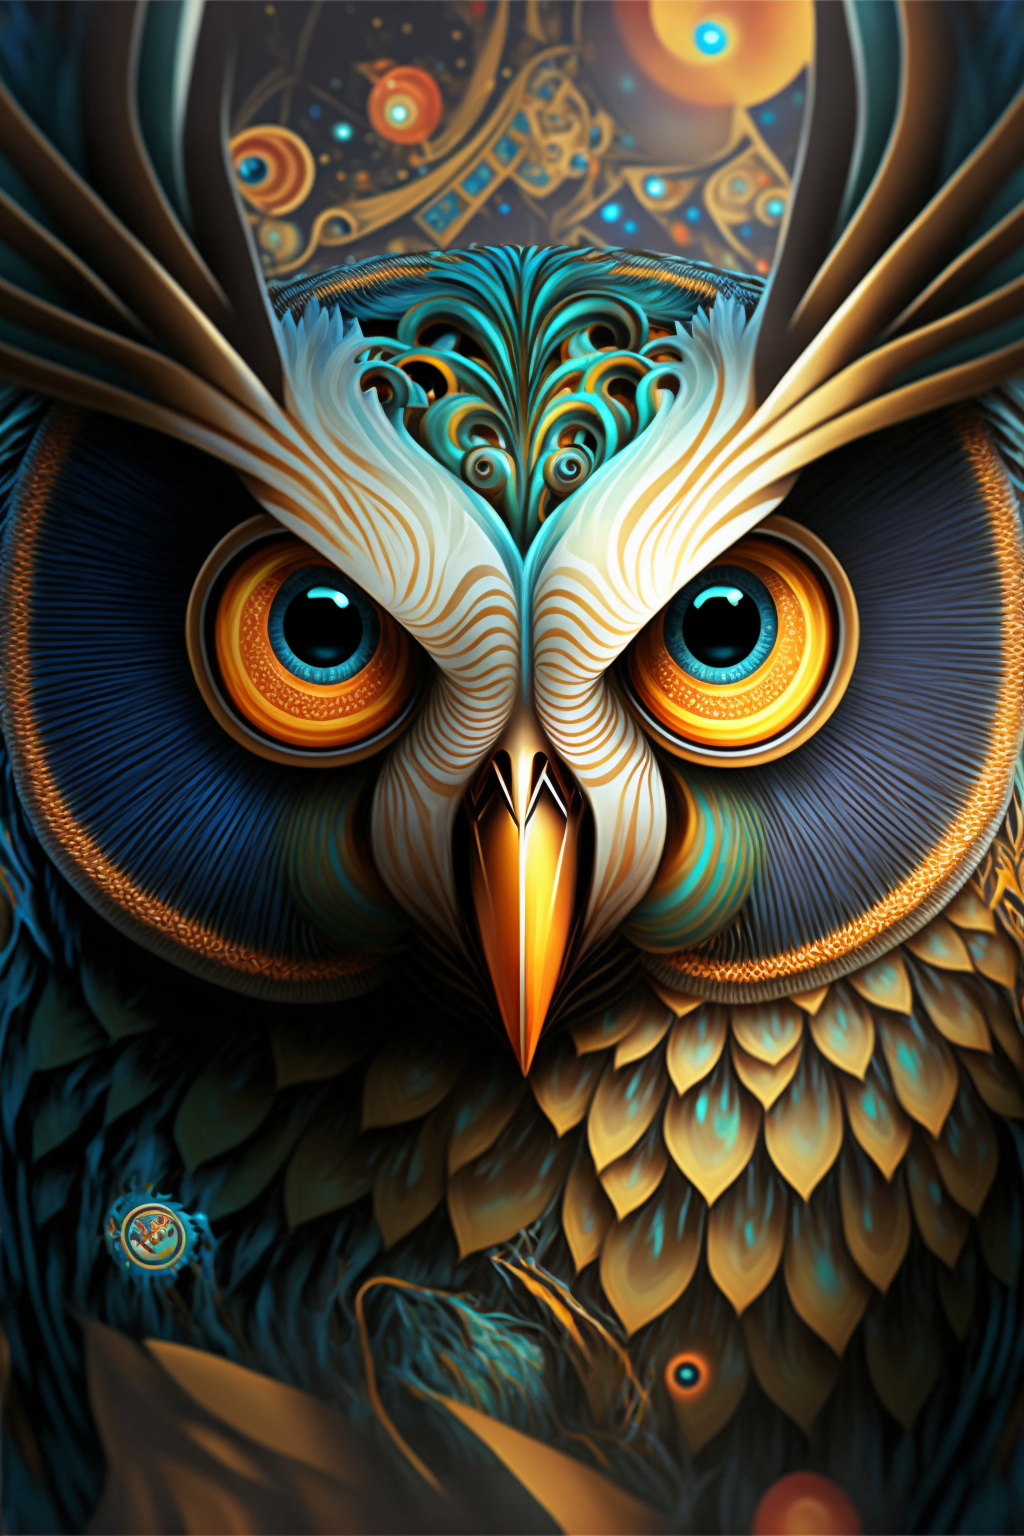 Owl in the style of Futurist Fantasia 1